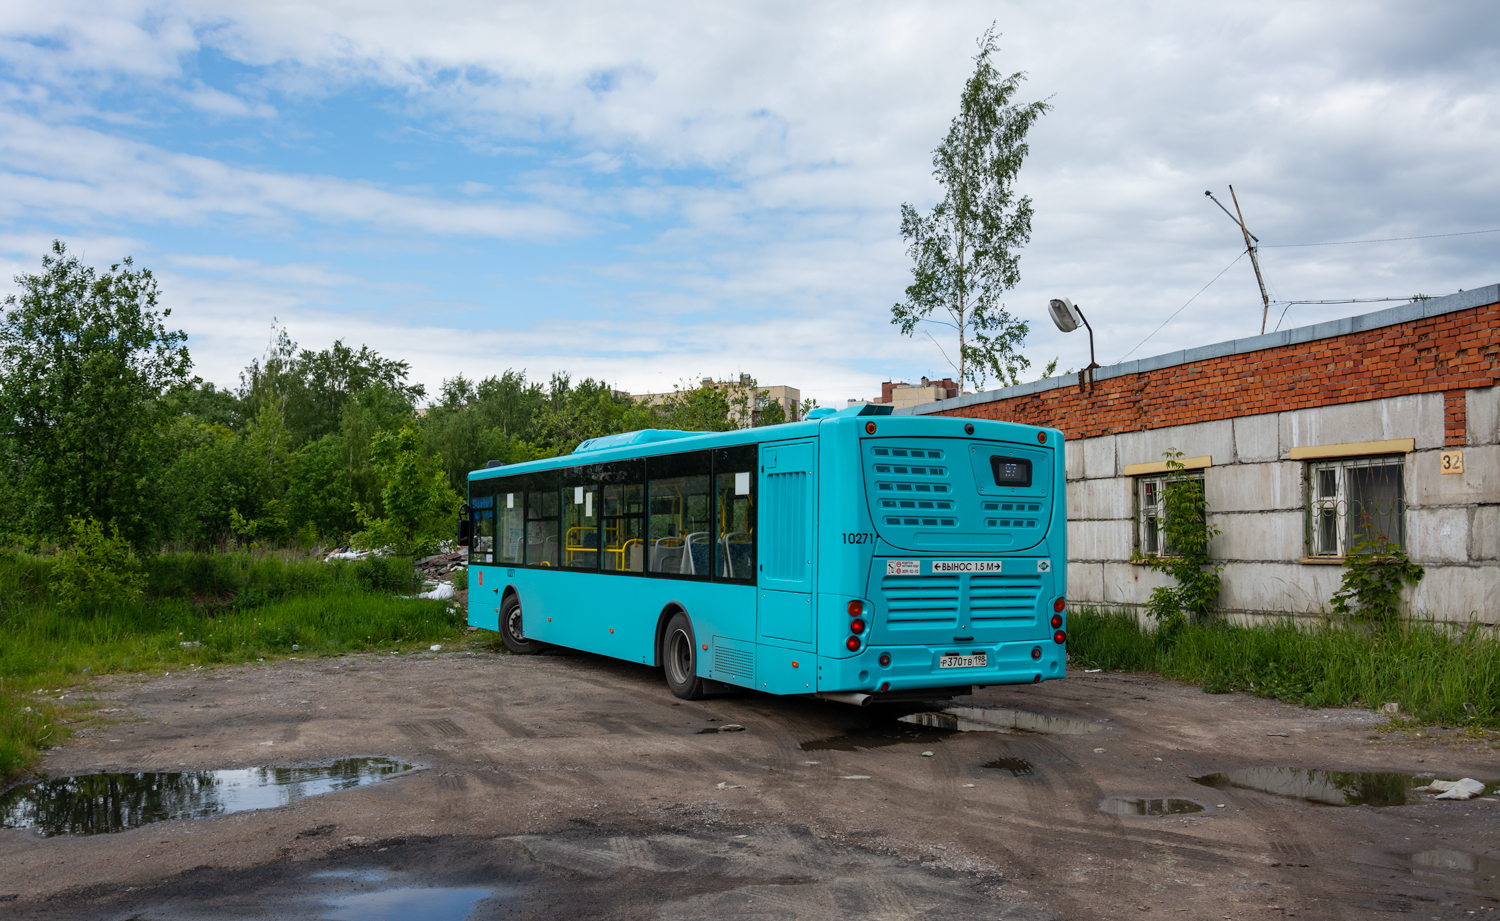 Saint Petersburg, Volgabus-5270.G4 (LNG) # 10271